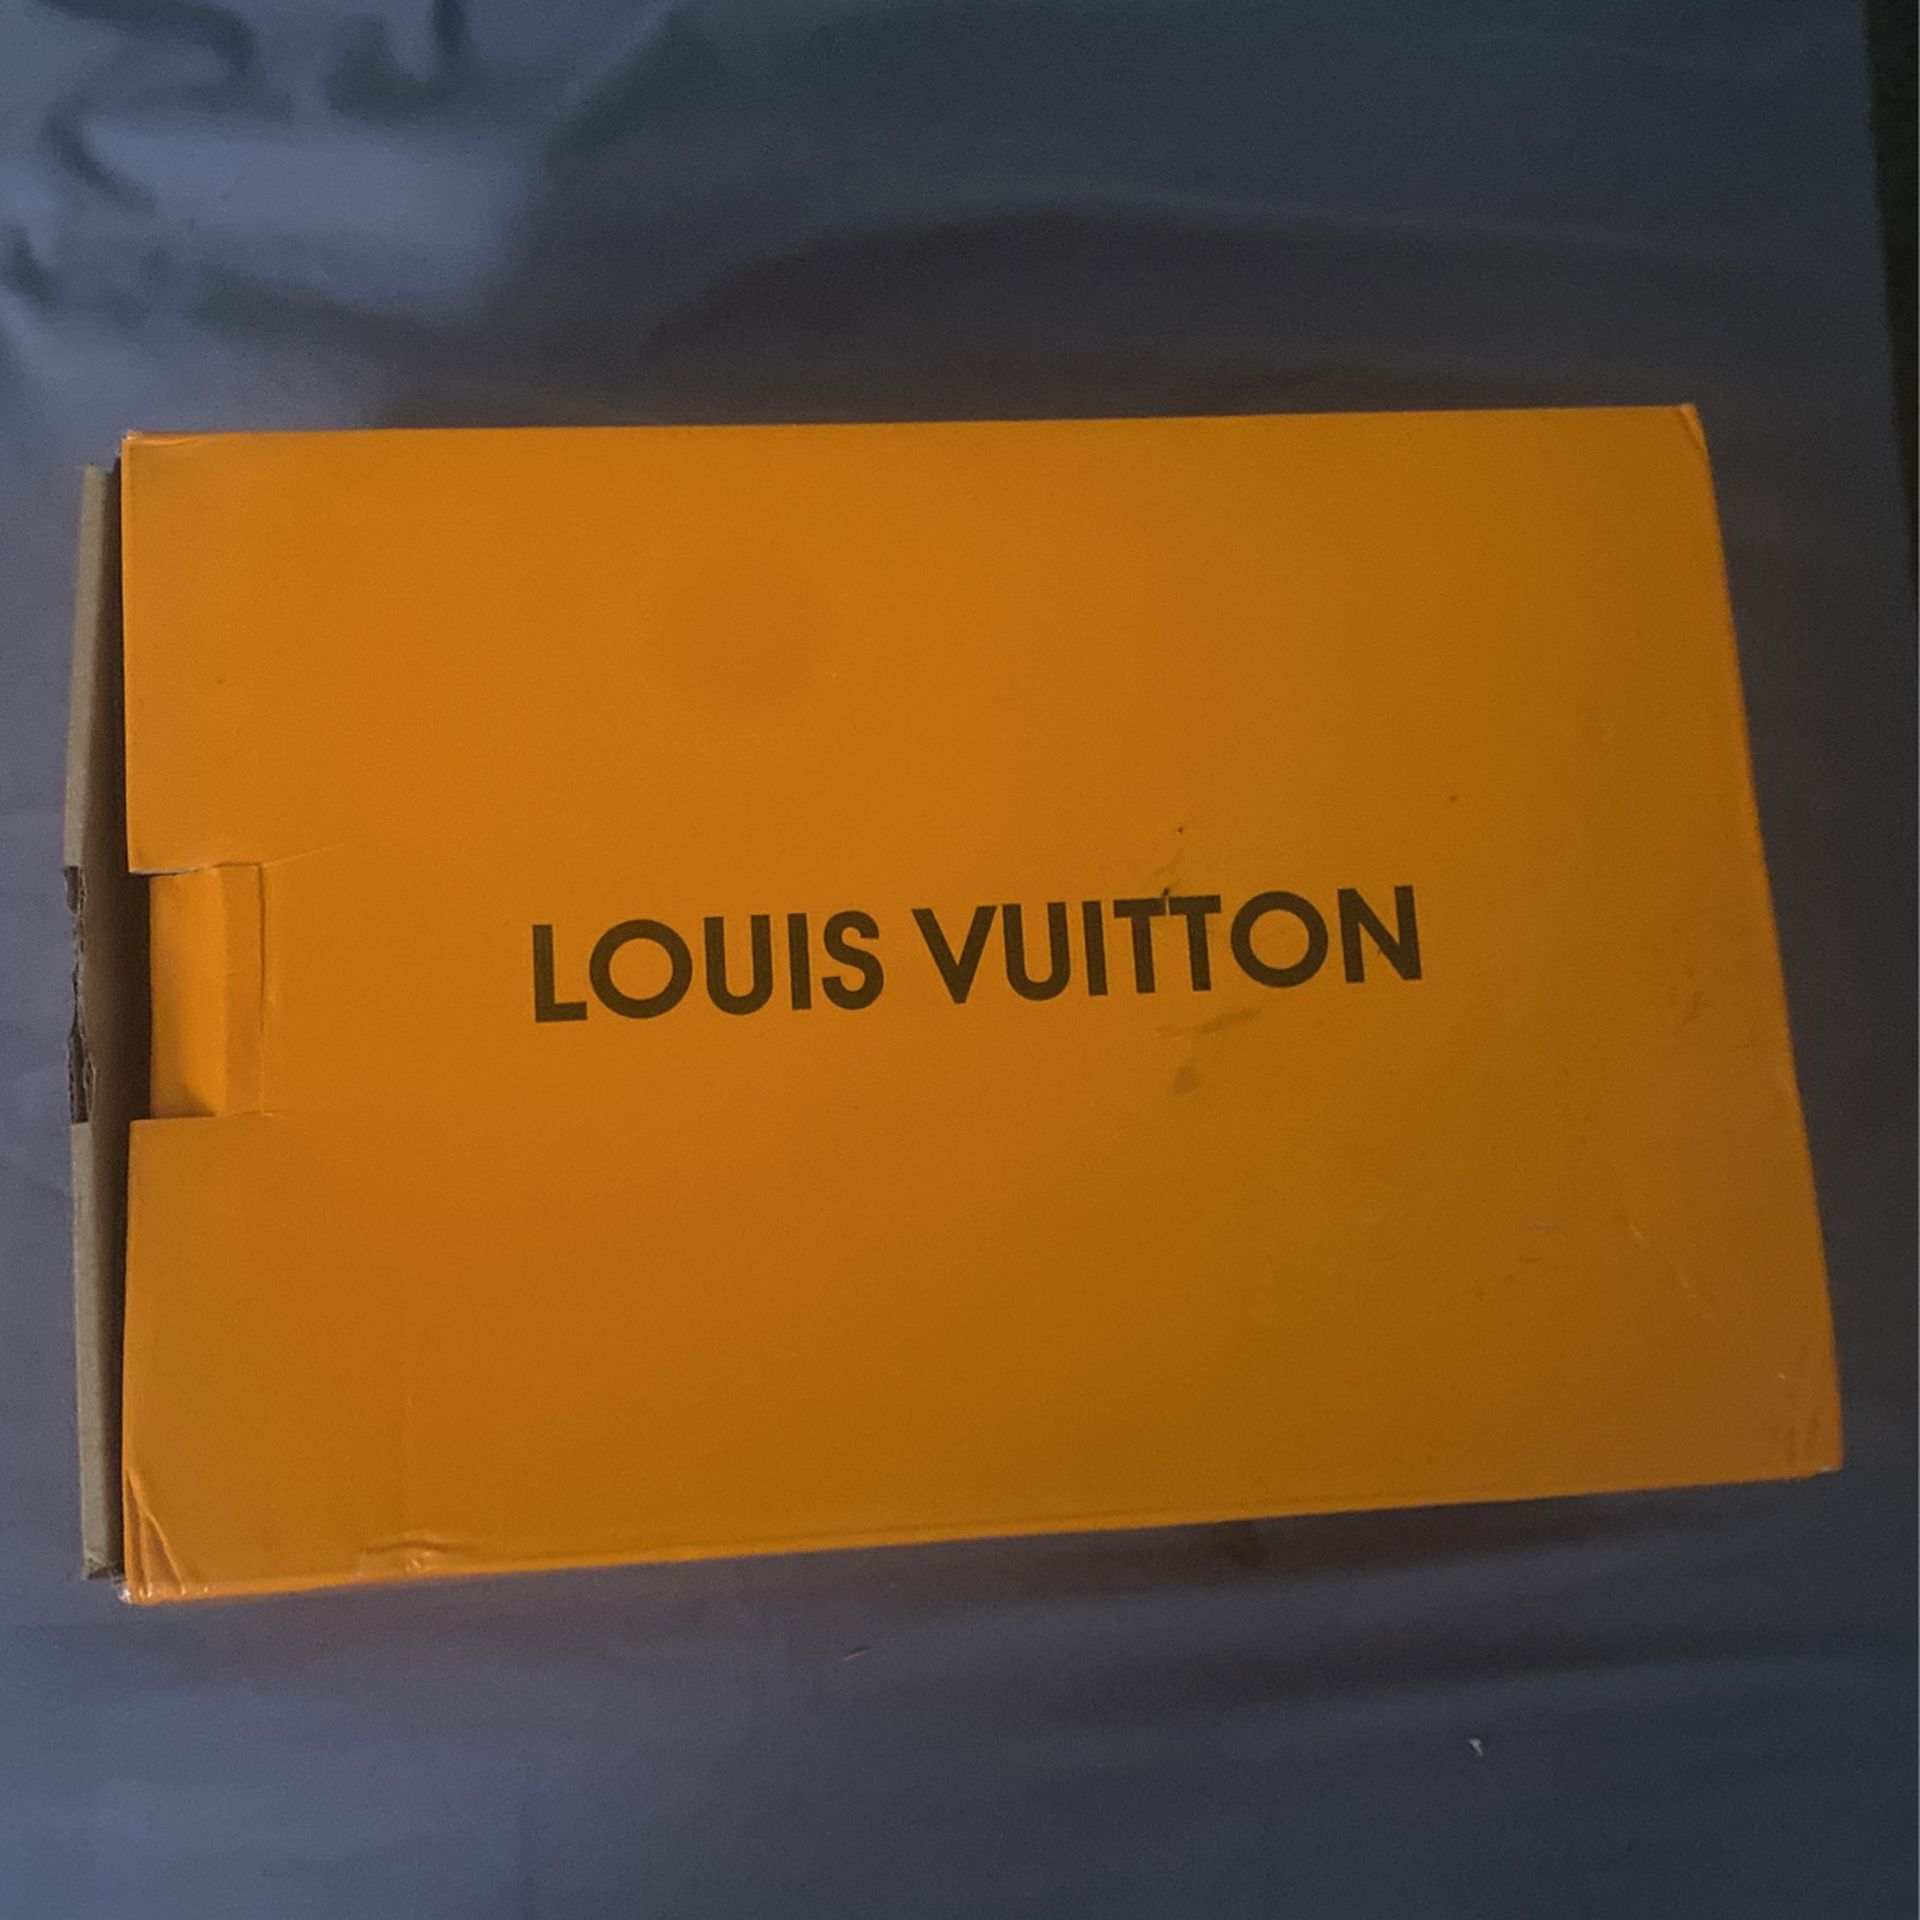 Louis Vuitton Trainer Eclipse for Sale in Lacombe, LA - OfferUp